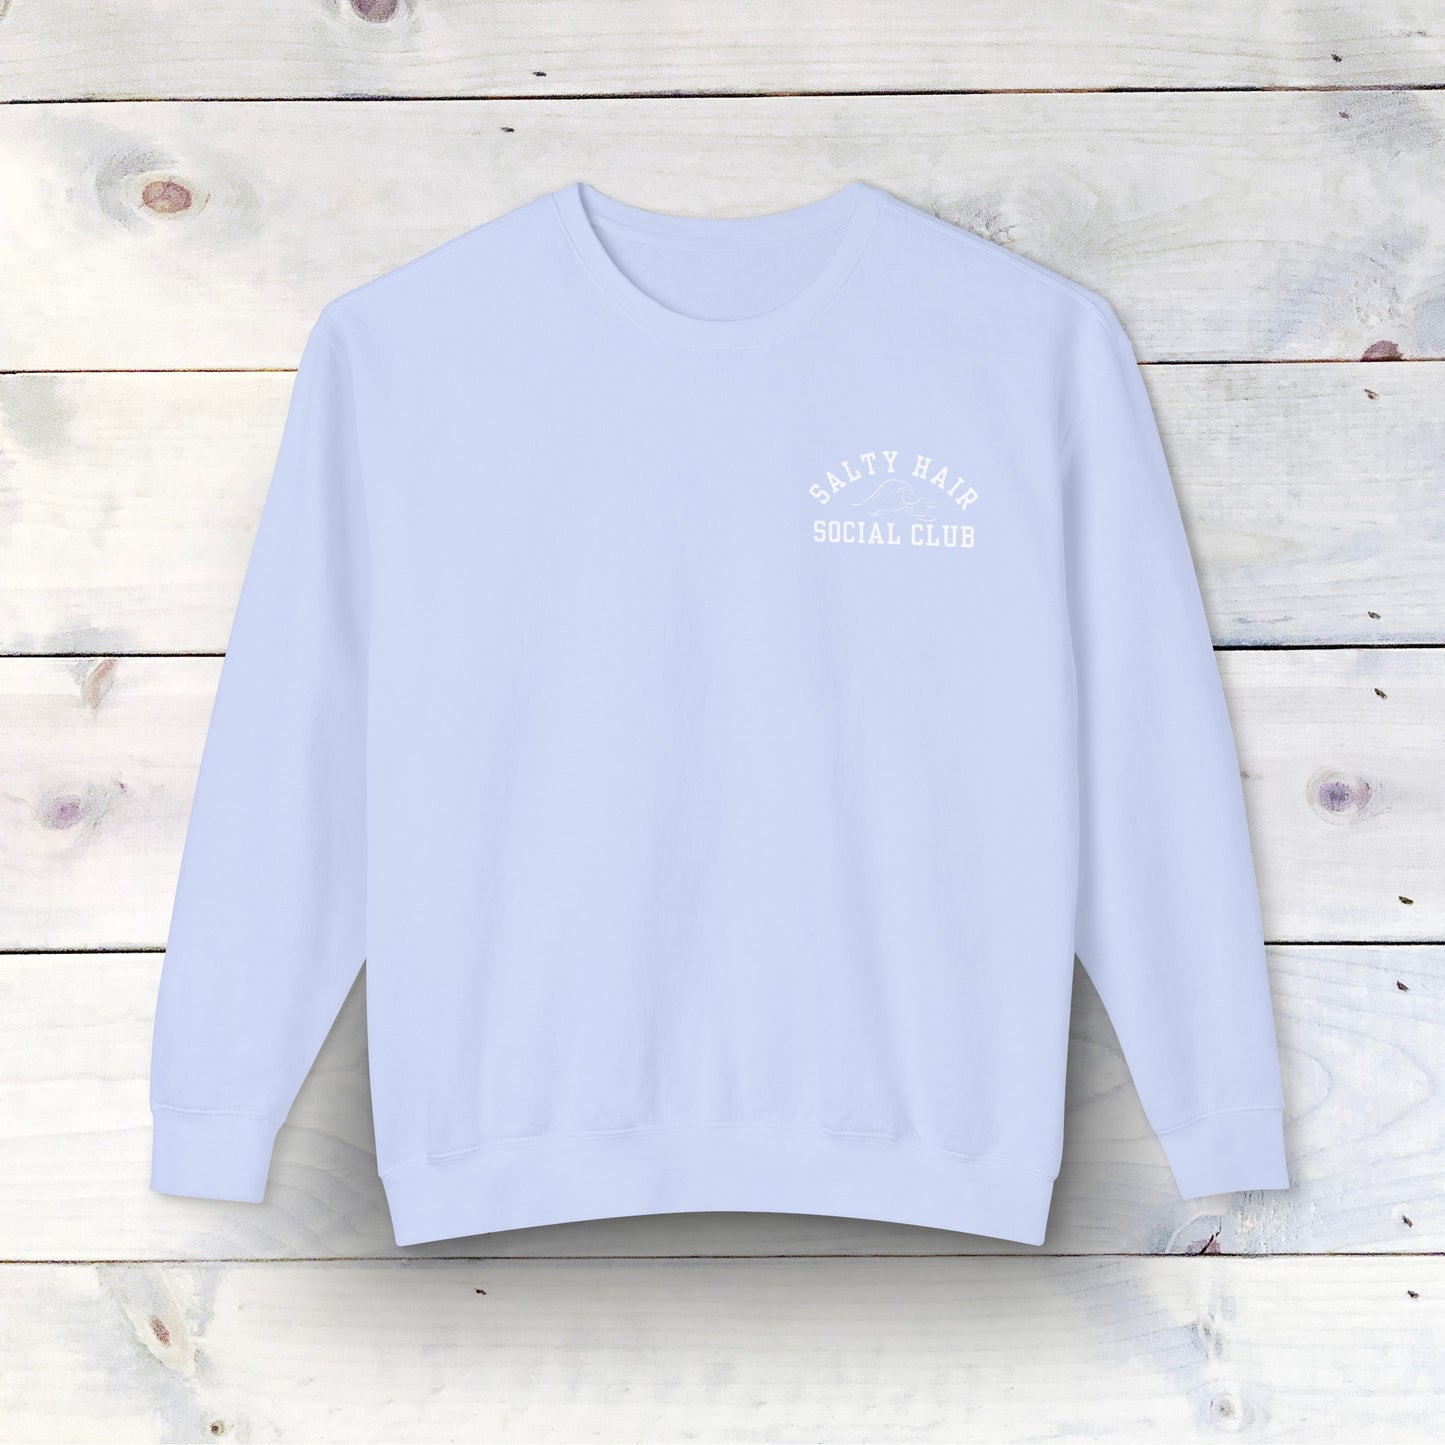 Salty Hair Social Club Crewneck Sweatshirt - 100% Ring-Spun Cotton, Relaxed Fit, Eco-Friendly